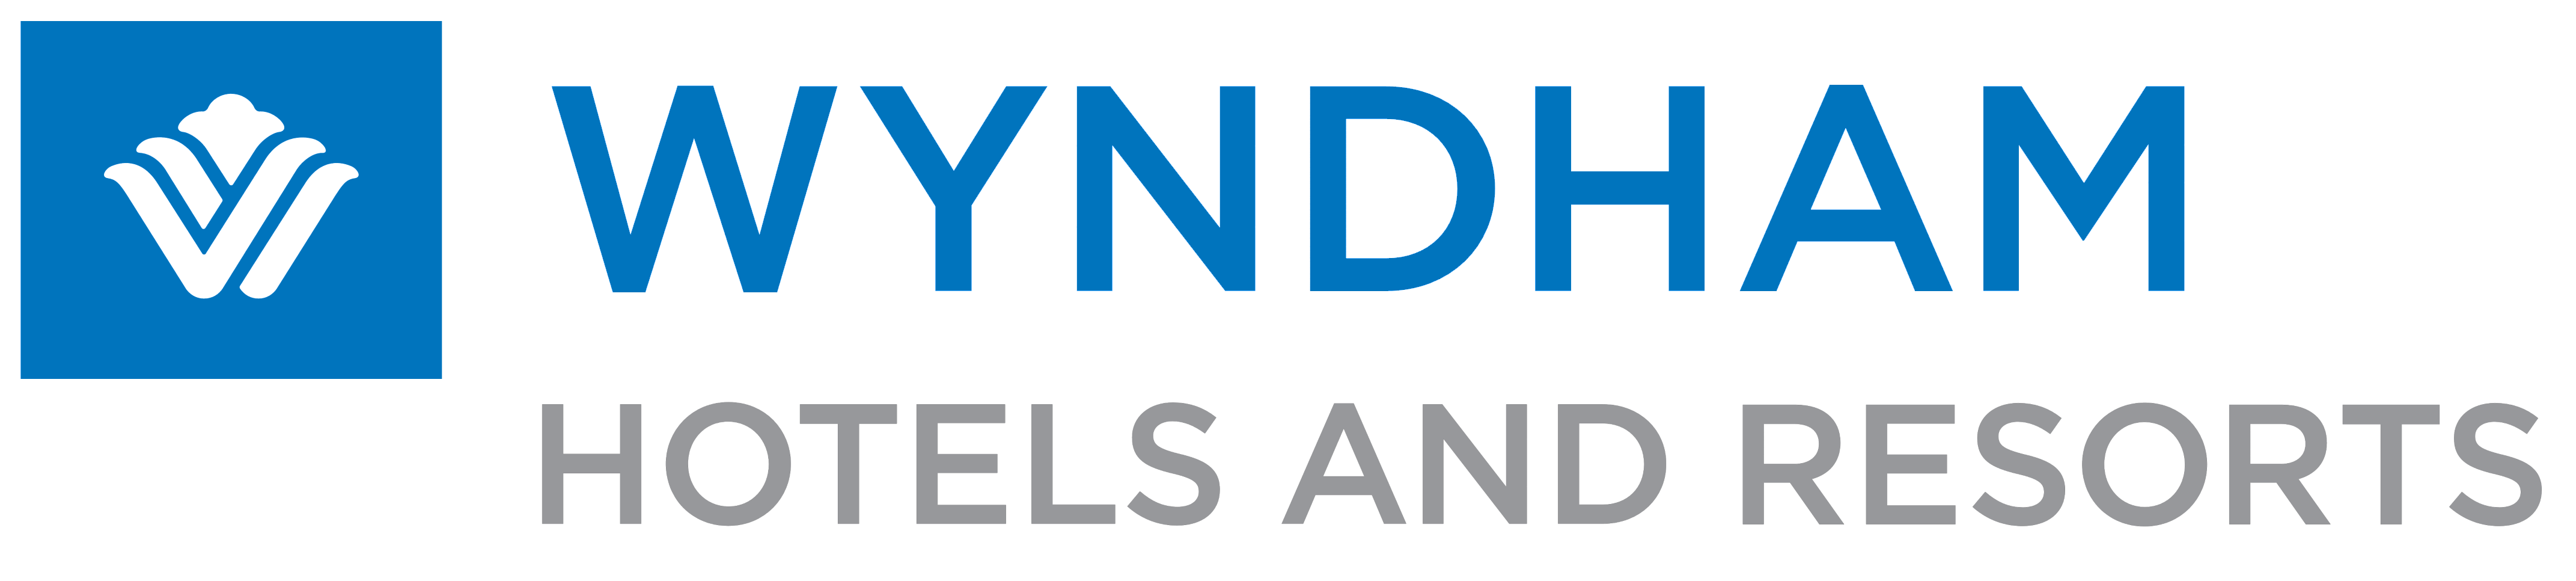 Wyndham_Hotels_and_Resorts_logo